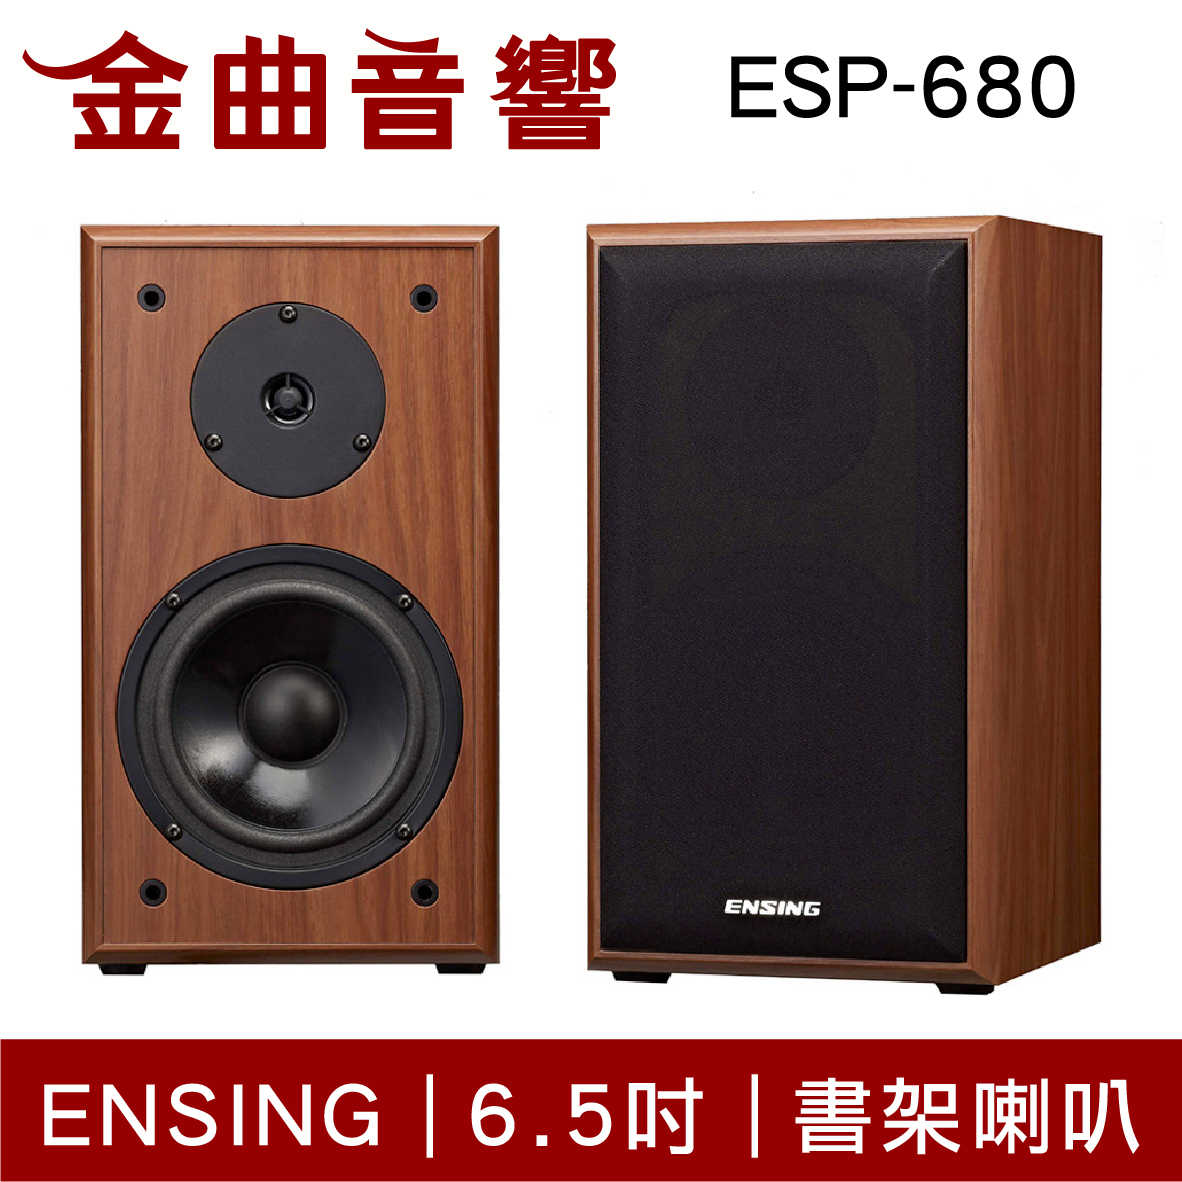 ENSING 燕聲 ESP-680 6.5吋 書架喇叭 一對 台灣製造 | 金曲音響